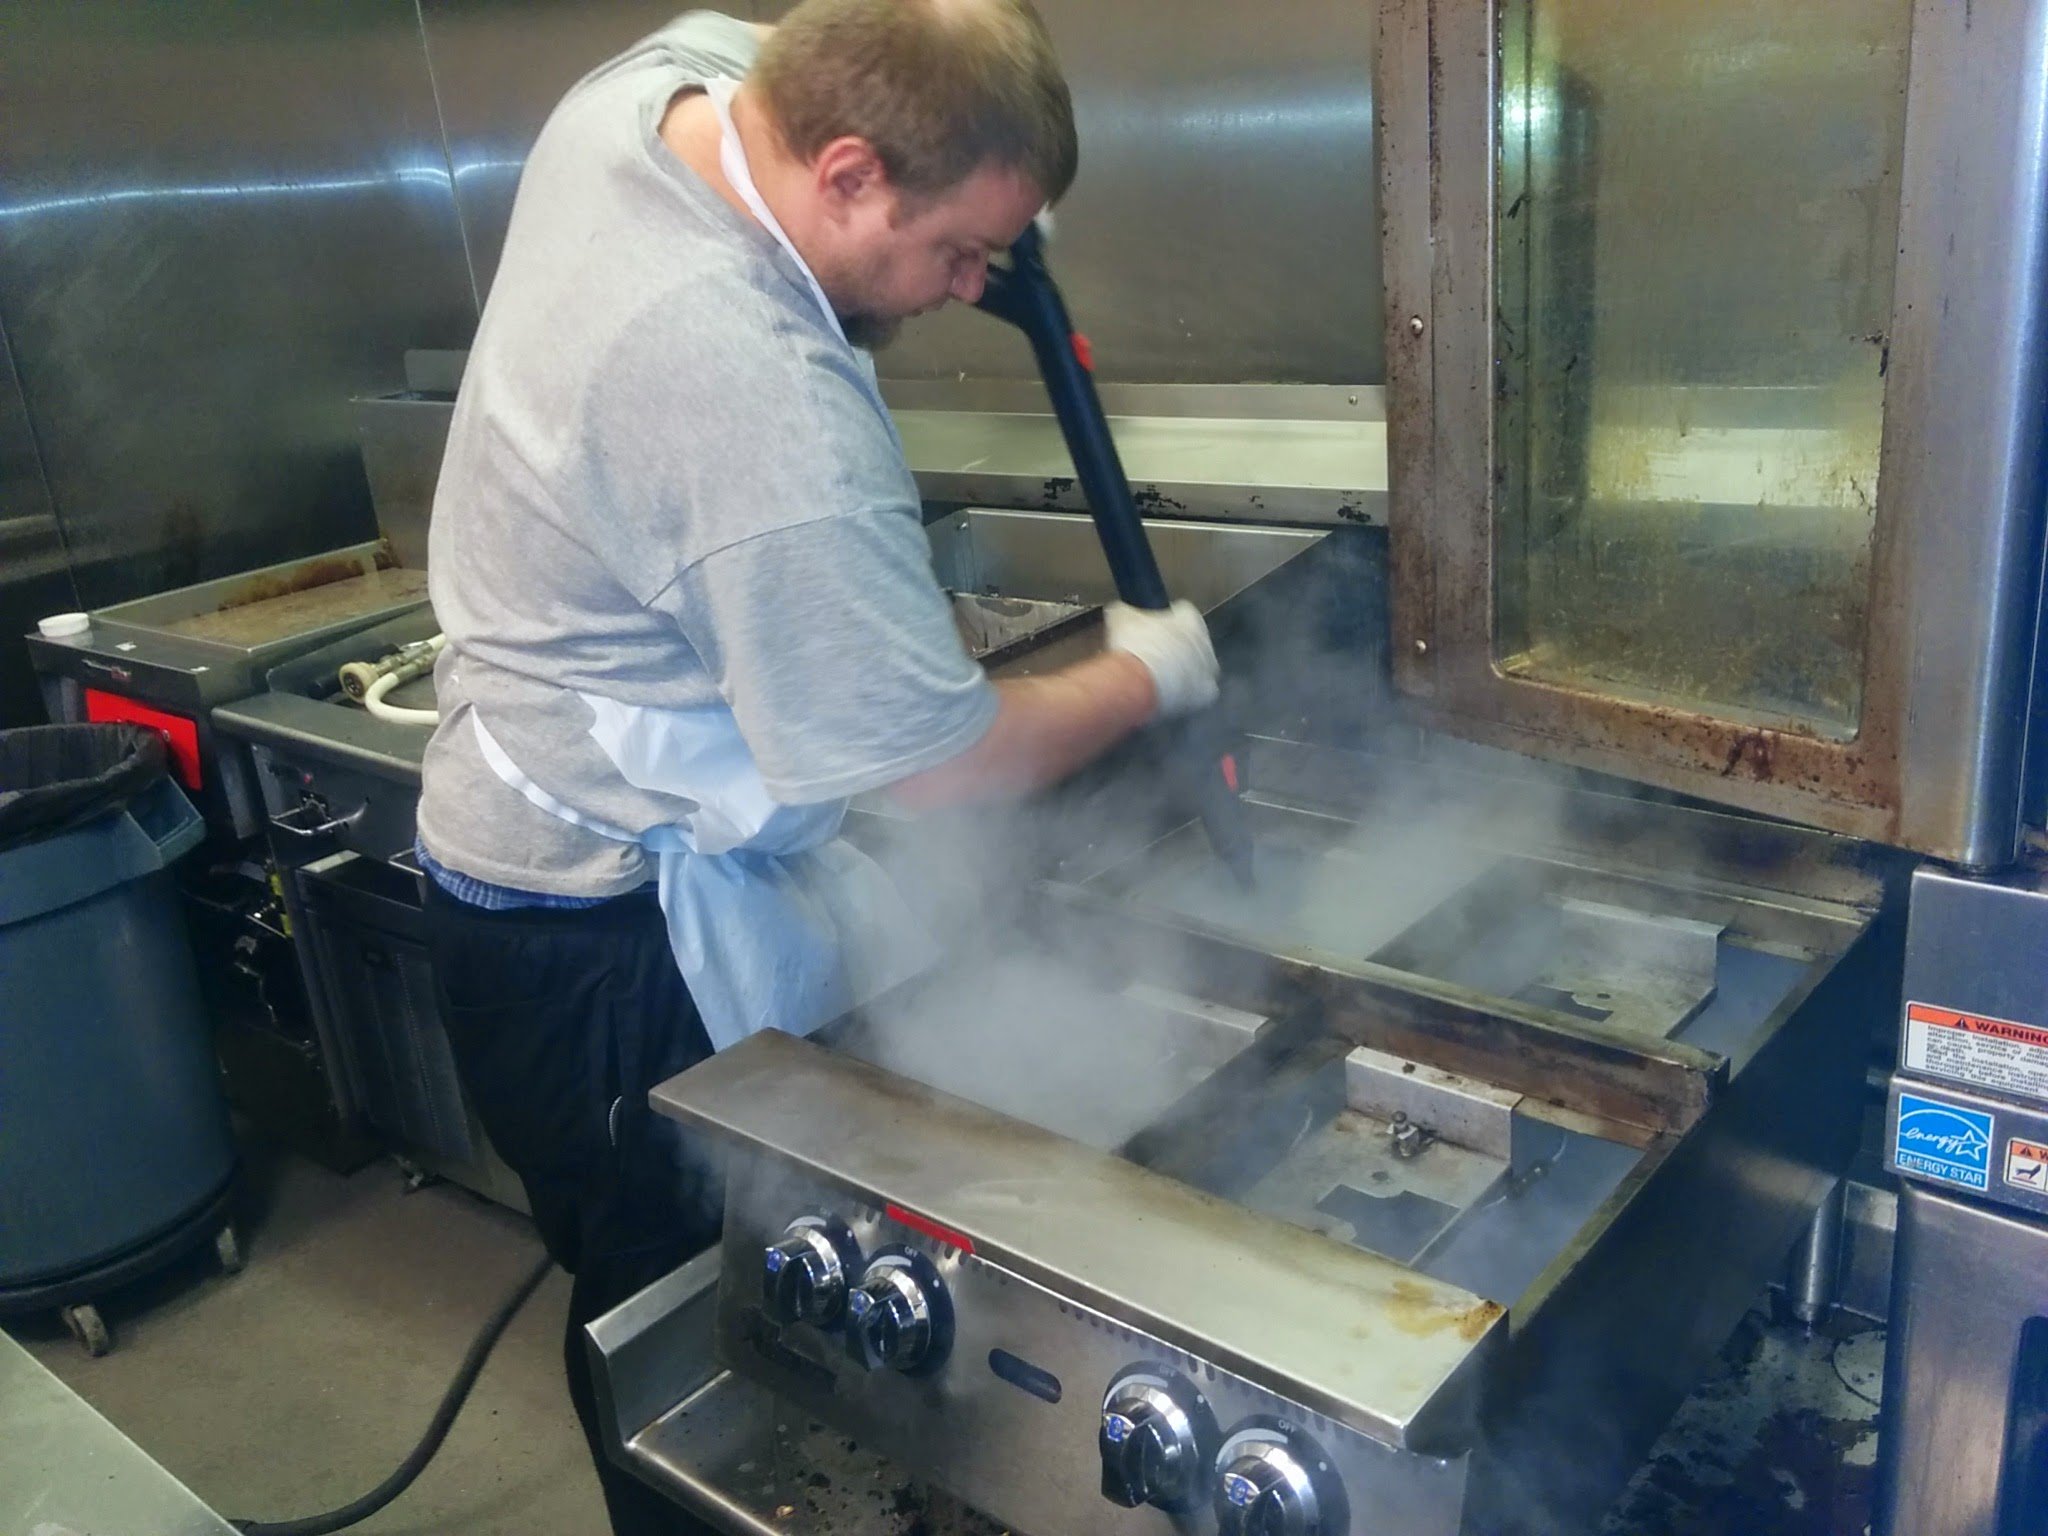 Kitchen Equipment Deep Steam Cleaning MD DC VA